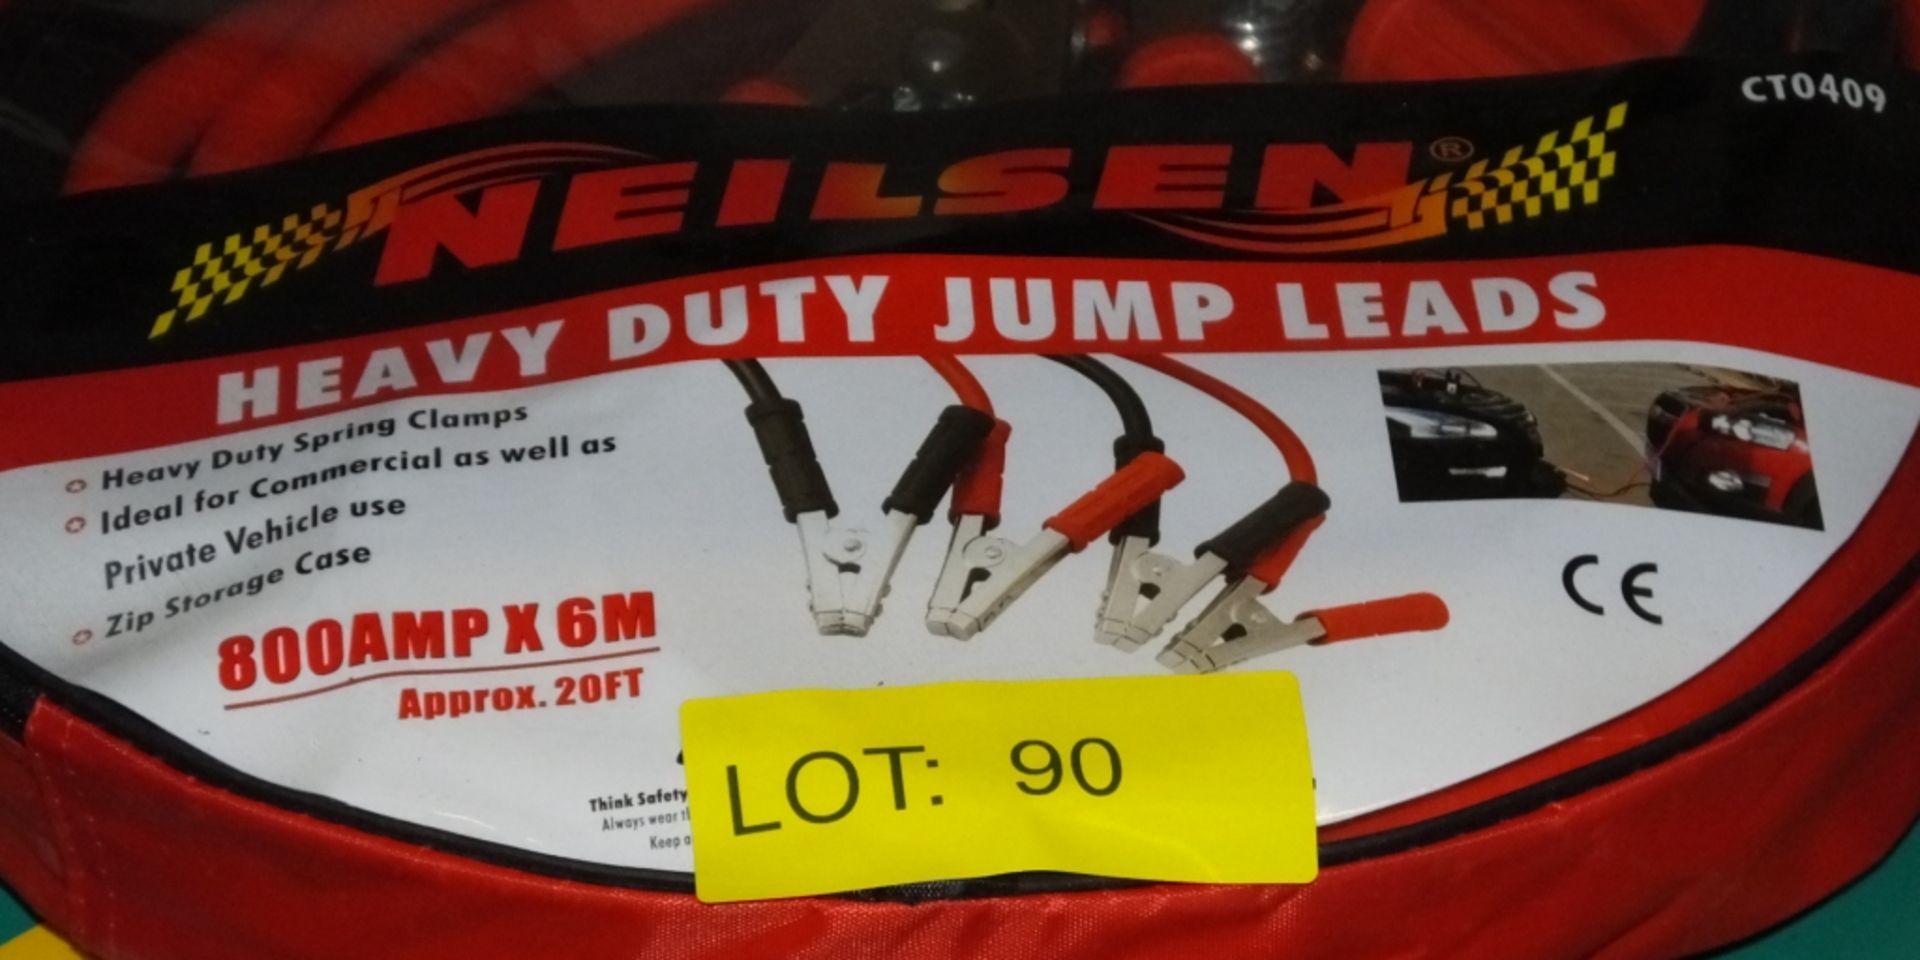 Neilsen Heavy Duty Jump Leads 800 amp x 6M - Image 2 of 2